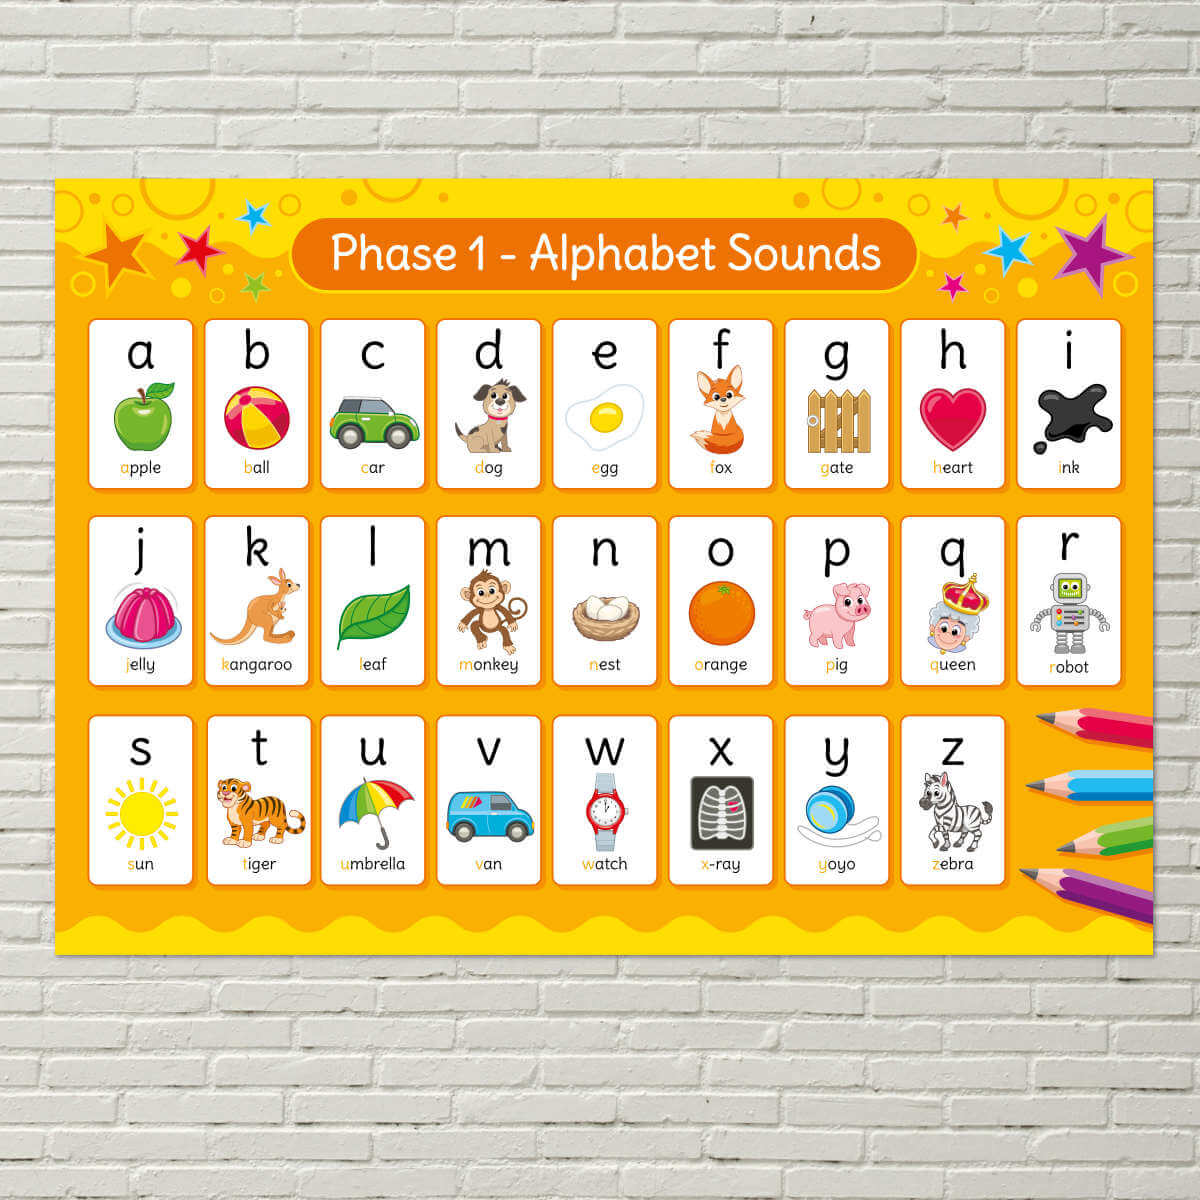 Phonic Sounds English Alphabets Phonics Poster Sounds Alphabet Phase English Primary